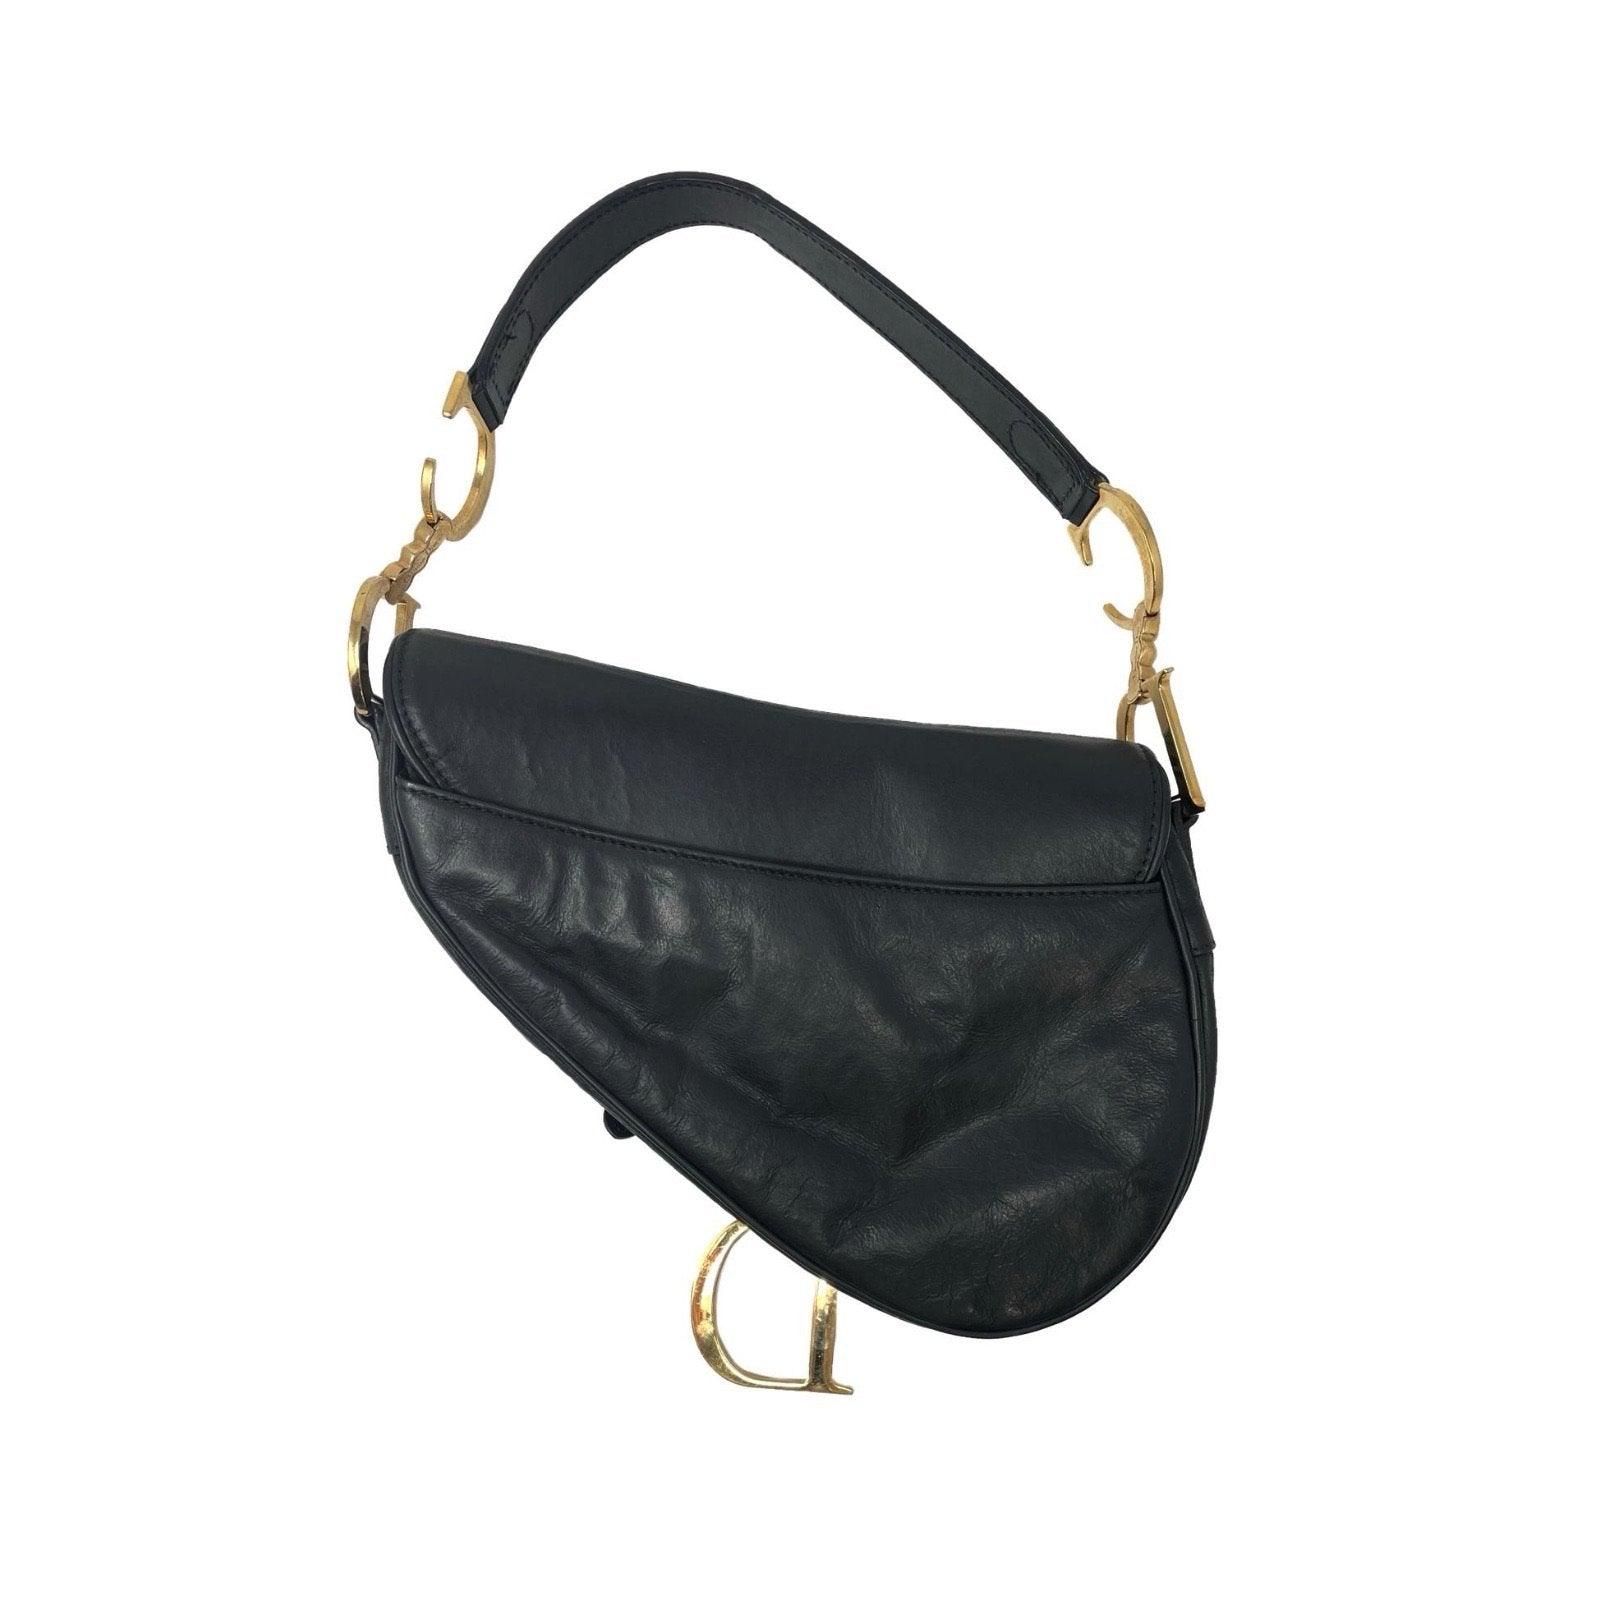 Dior Black Saddle Bag